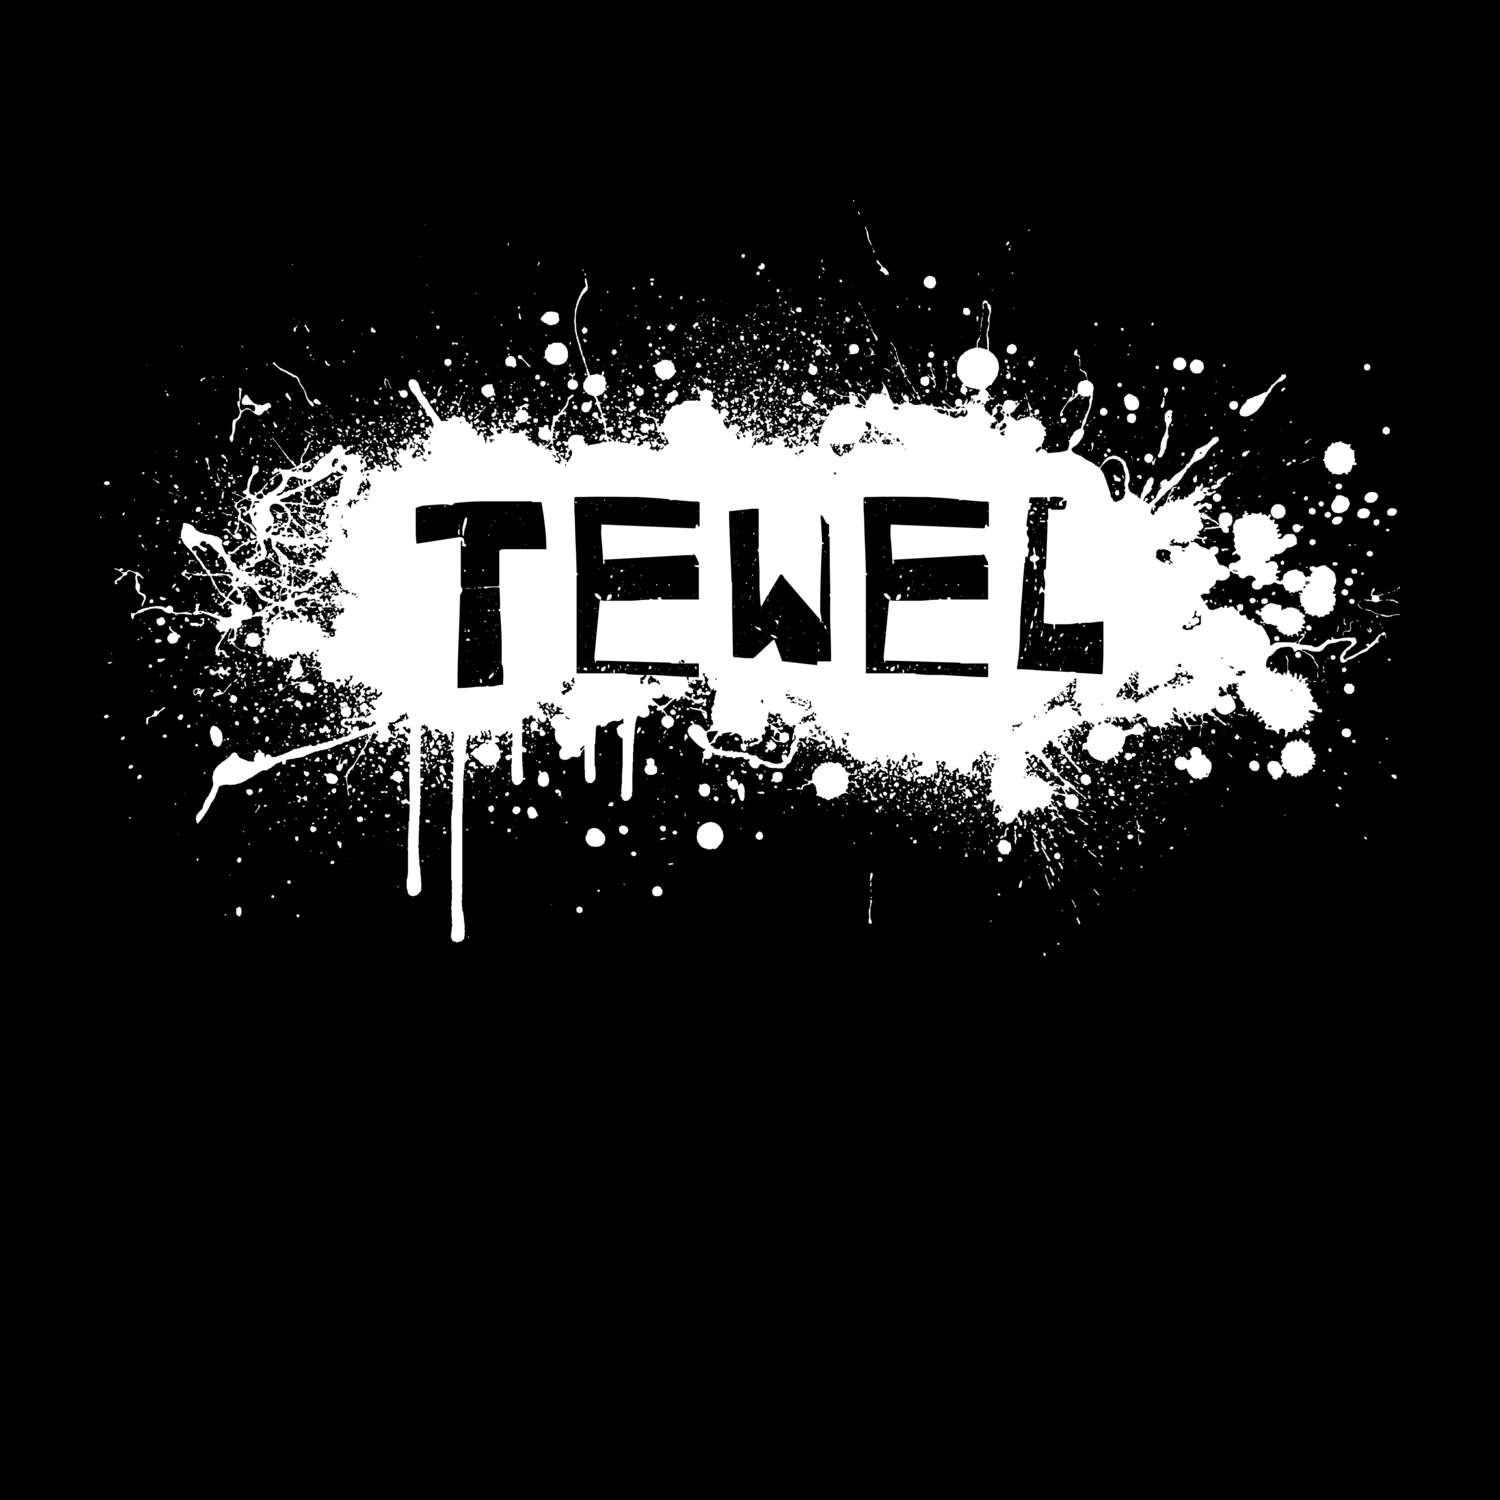 Tewel T-Shirt »Paint Splash Punk«